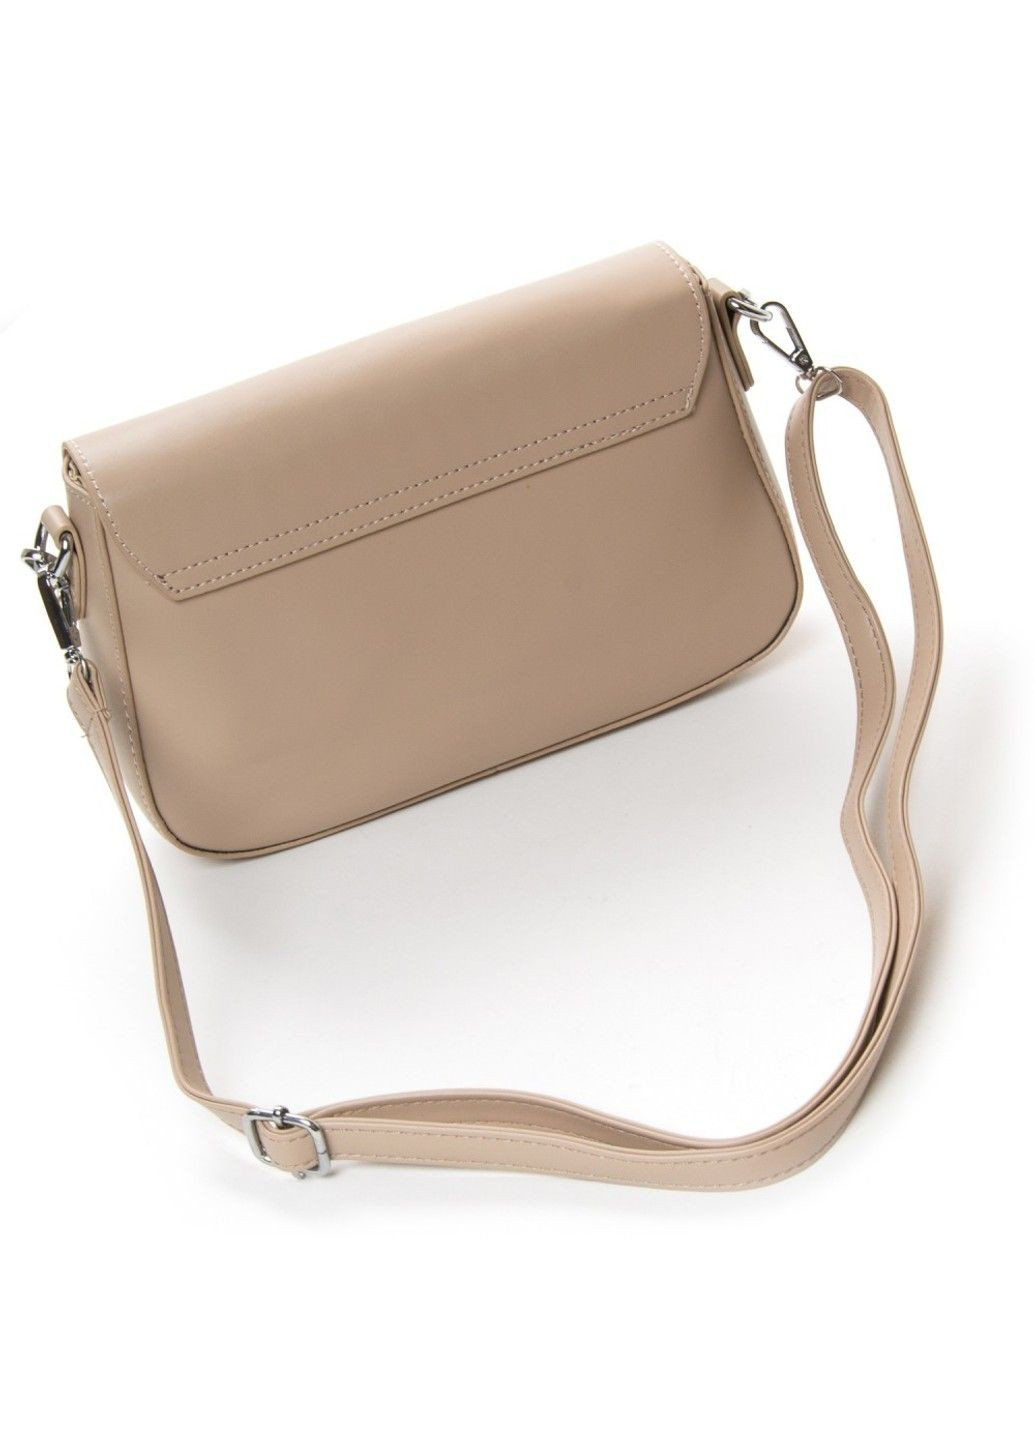 Женская сумочка из кожезаменителя 22 2829 khaki Fashion (282820152)